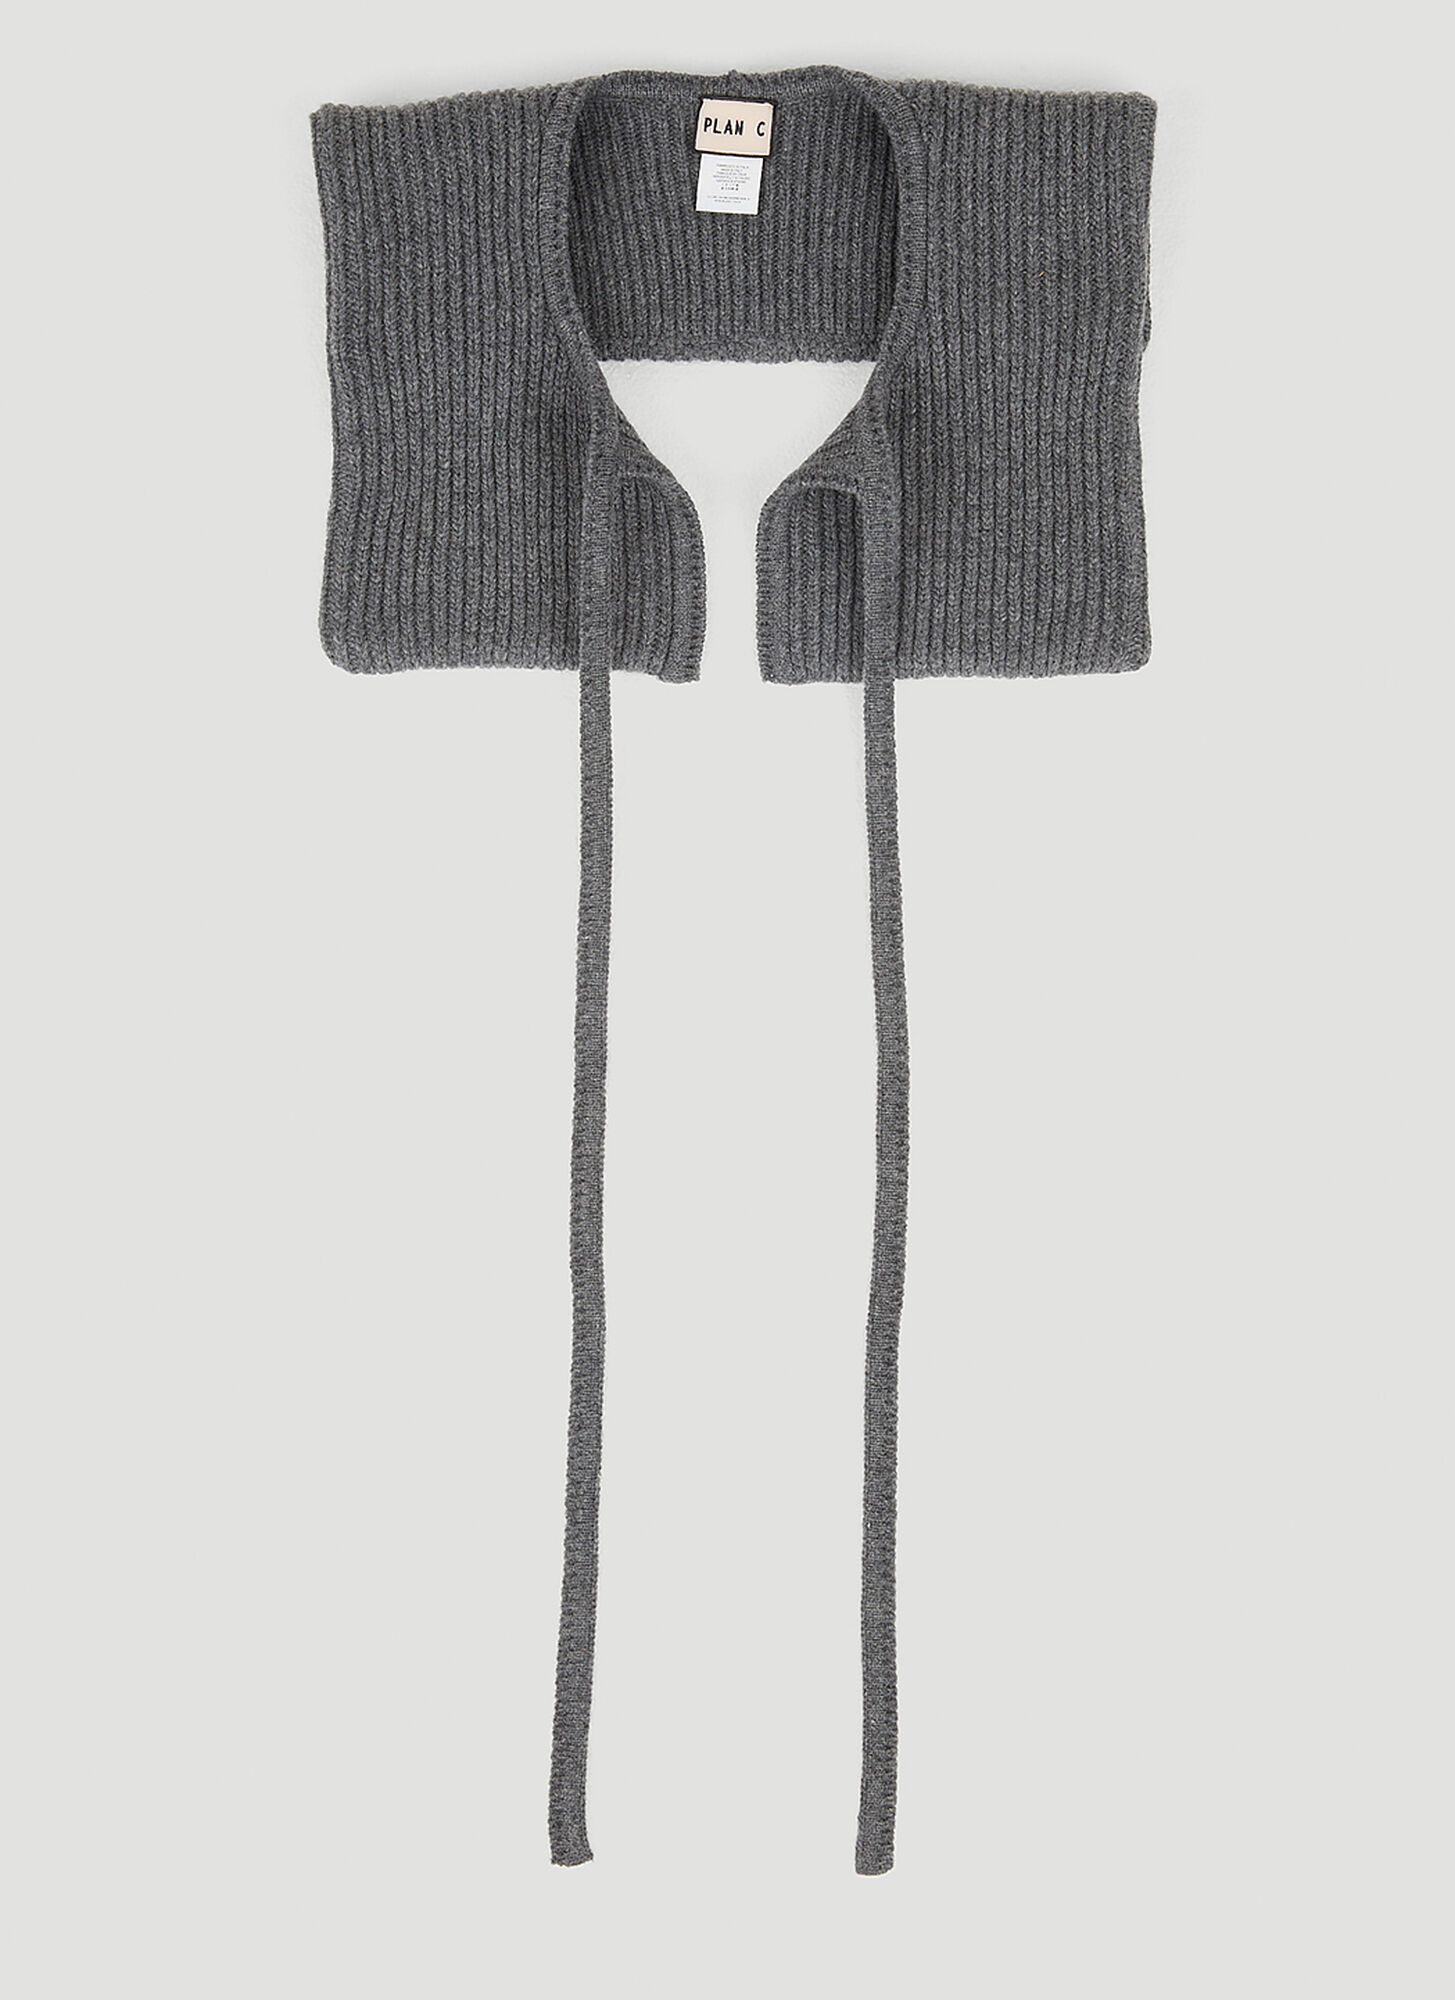 Plan C Knit Collar In Grey